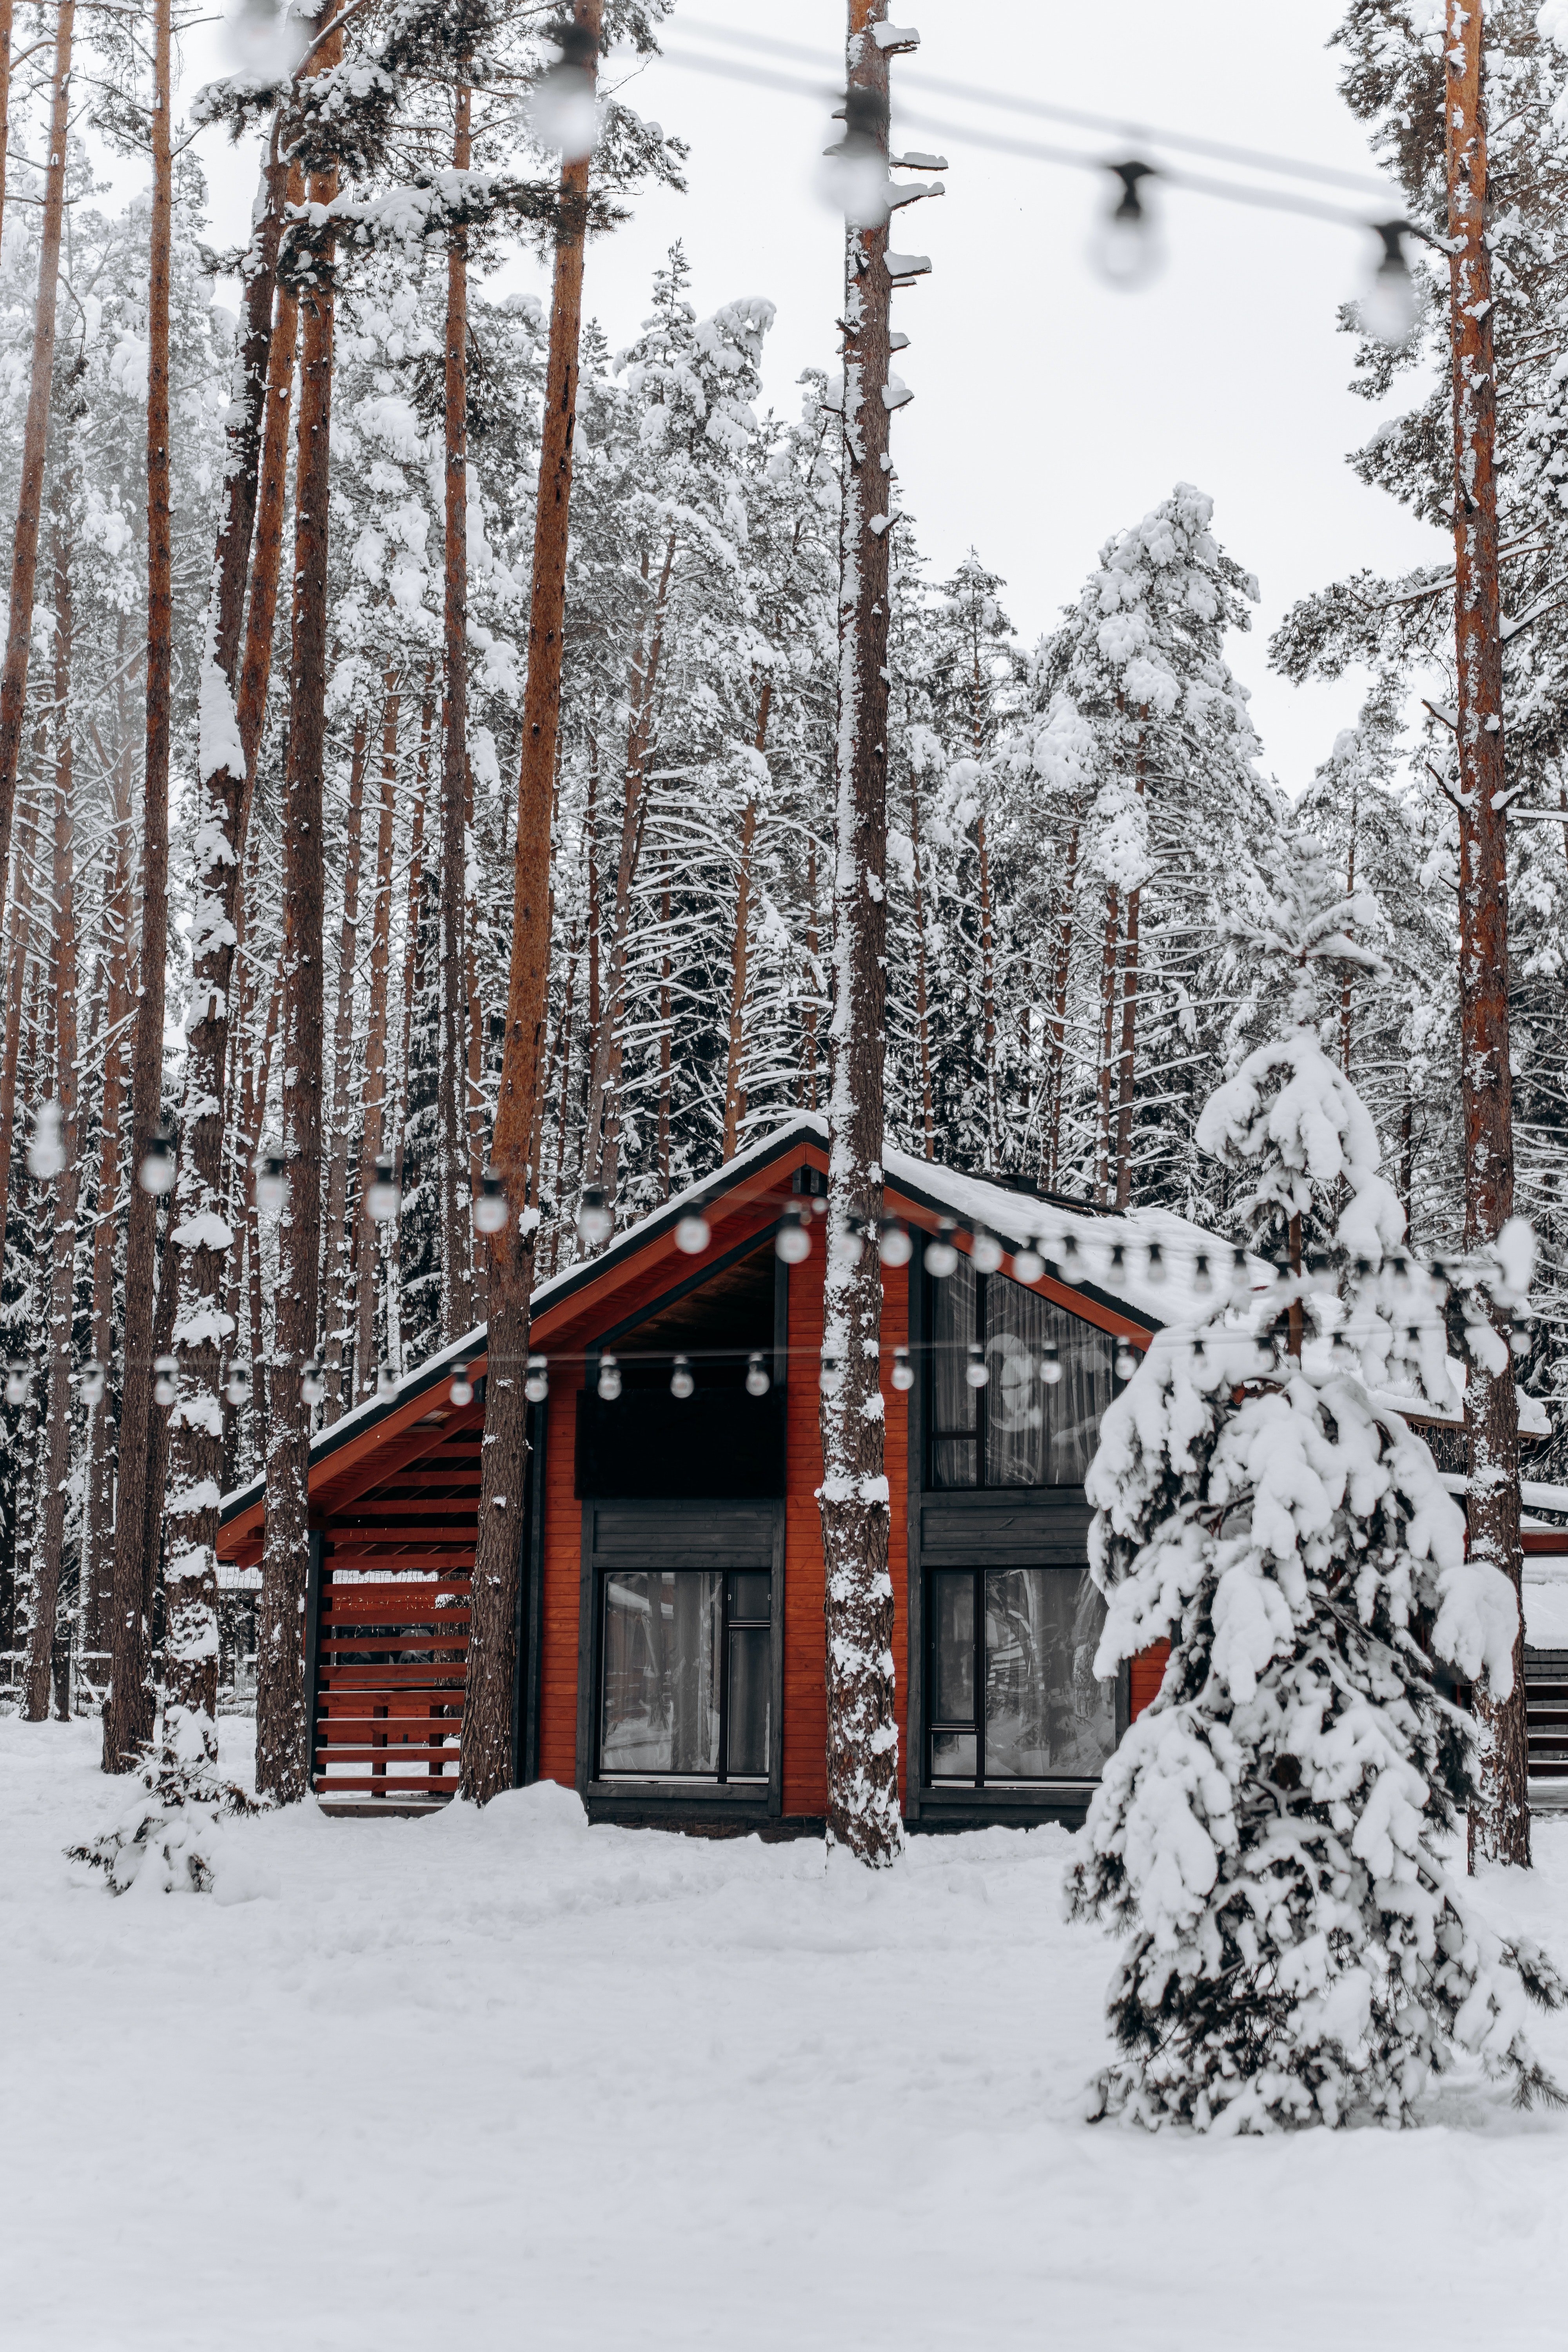 Casa en el bosque lleno de nieve. | Foto: Pexels